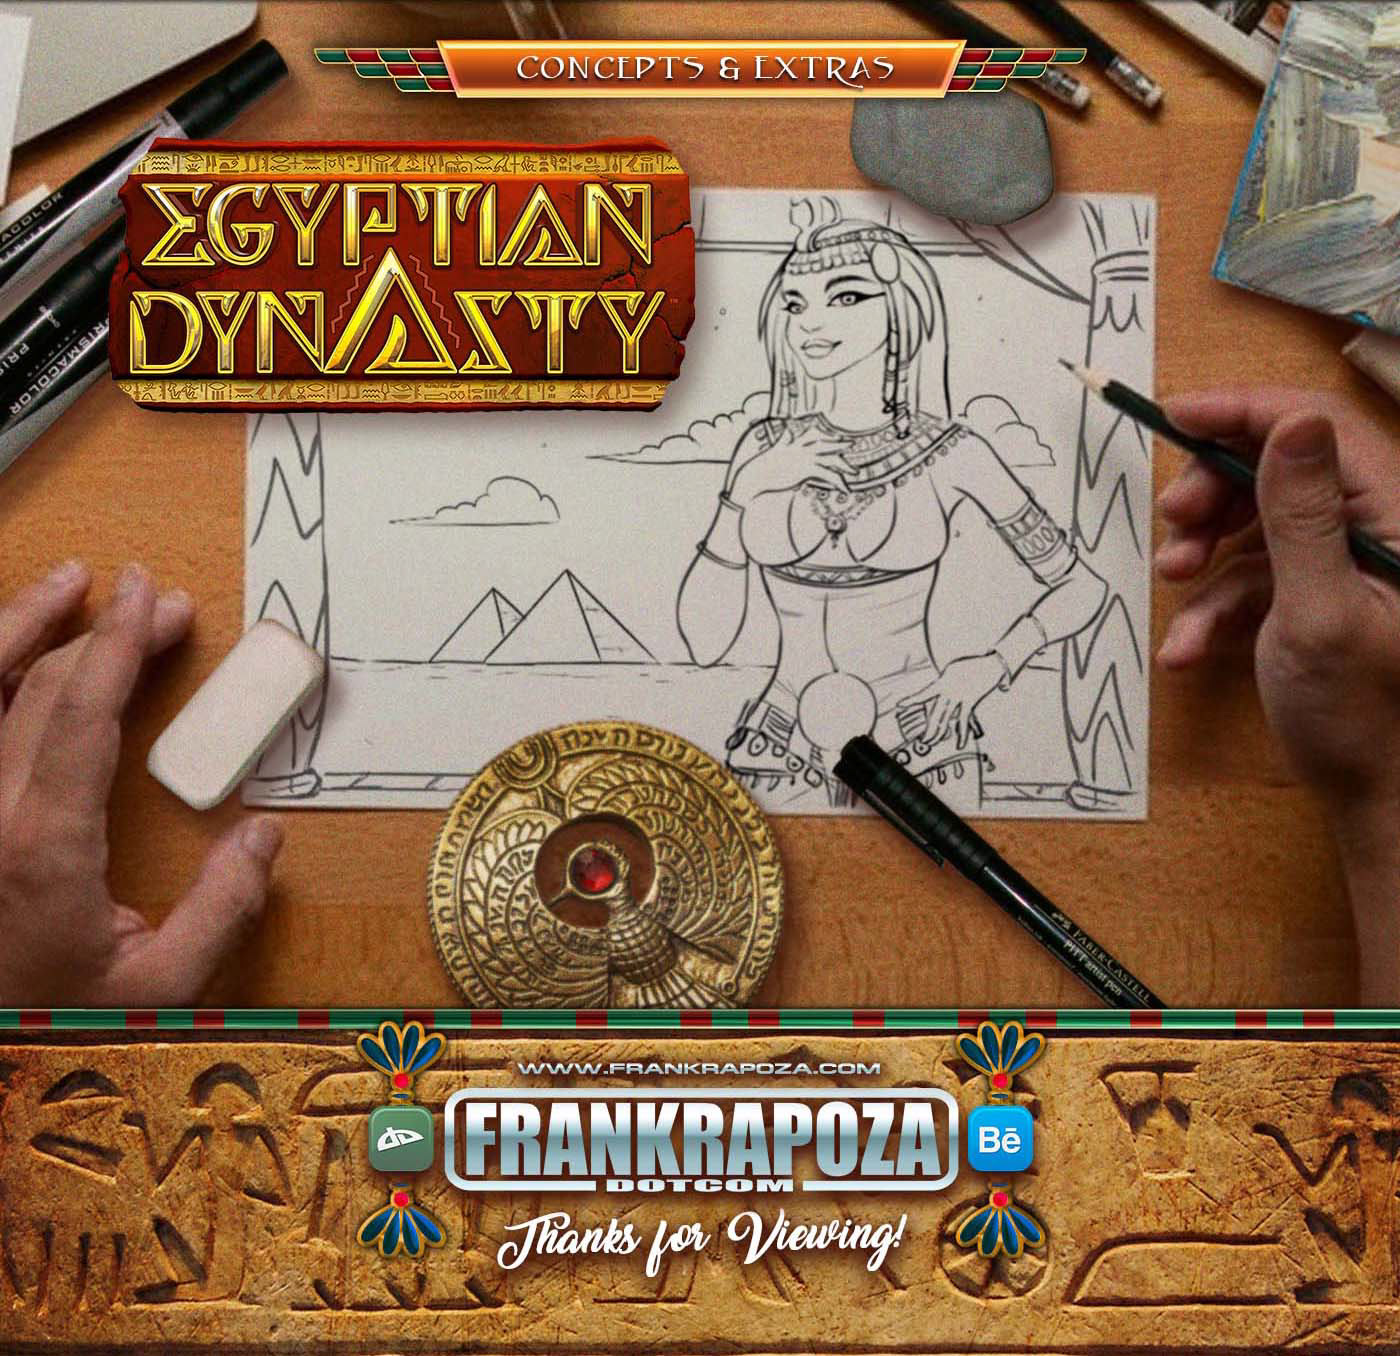 art casino Character cleopatra design egypt Gaming gold ILLUSTRATION  logo